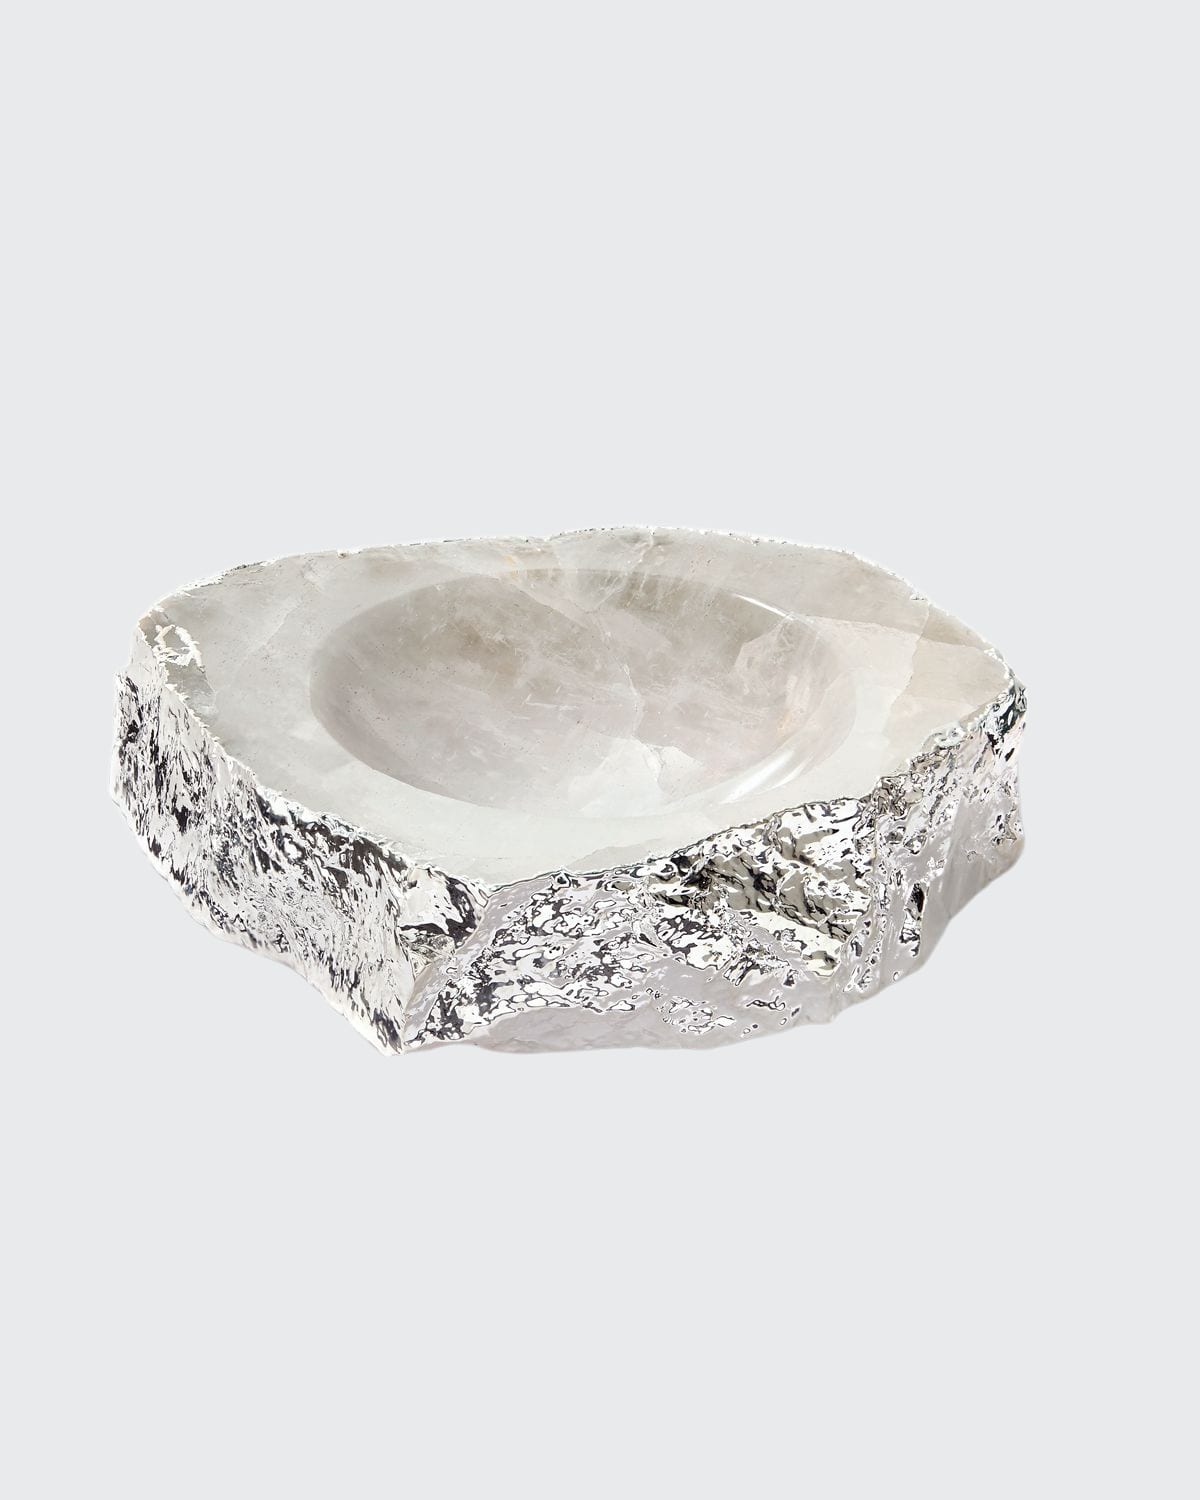 ANNA New York Casca Large Crystal Bowl, Silver